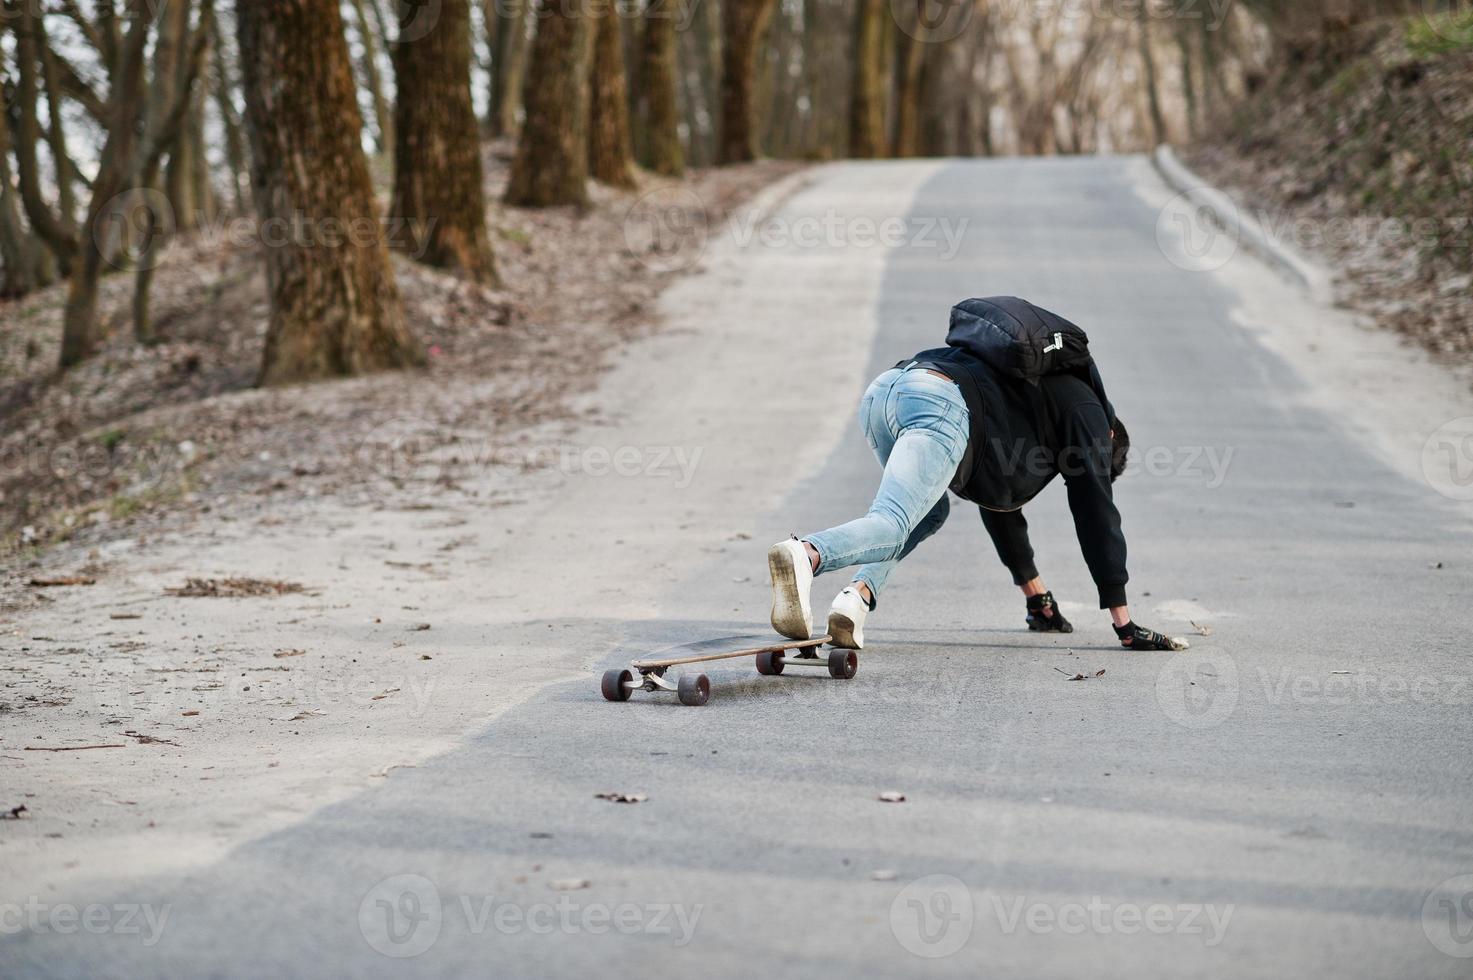 Fail falling from a skateboard. Street style arab man in eyeglasses with longboard longboarding down the road. photo